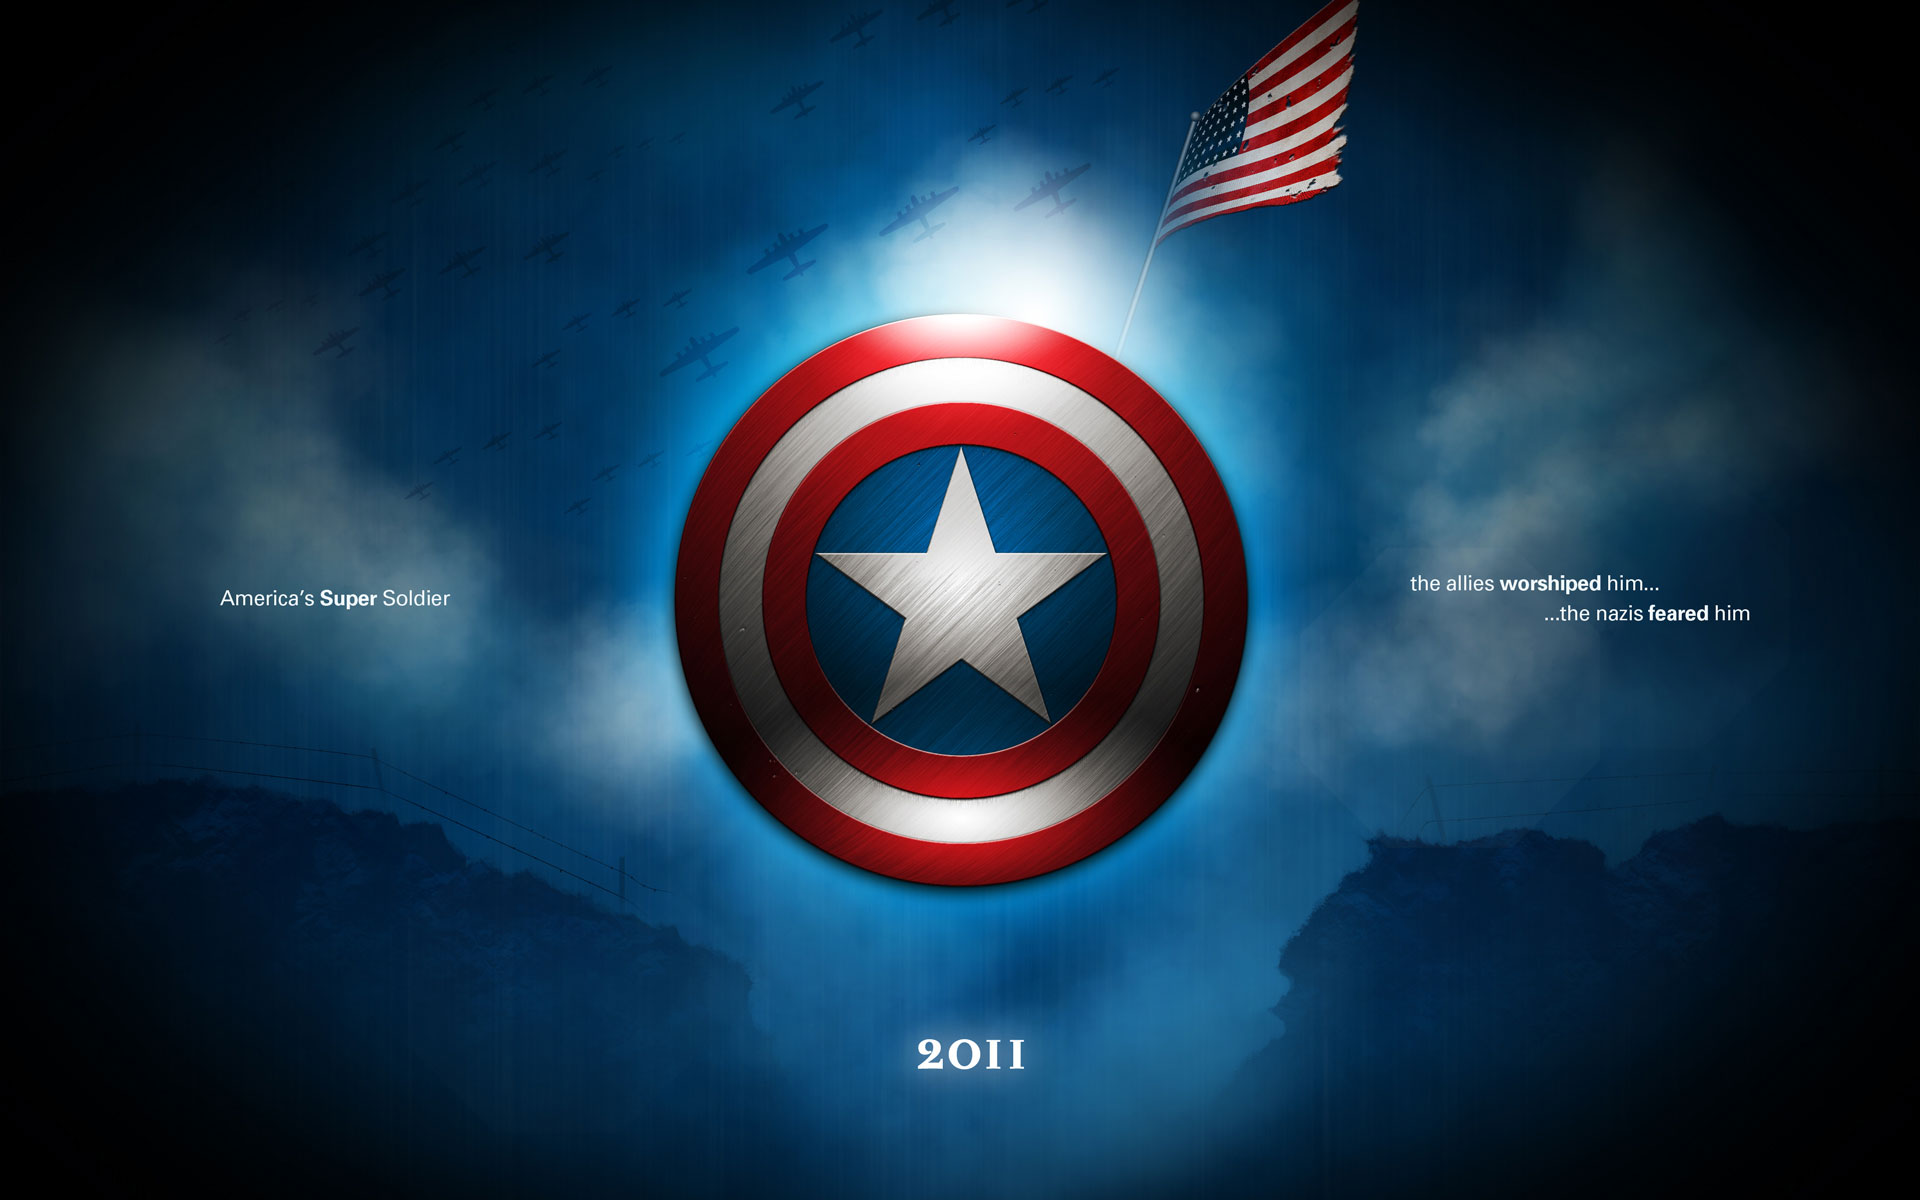 Avengers Captain America 3D Wall Mural Wallpaper – beddingandbeyond.club